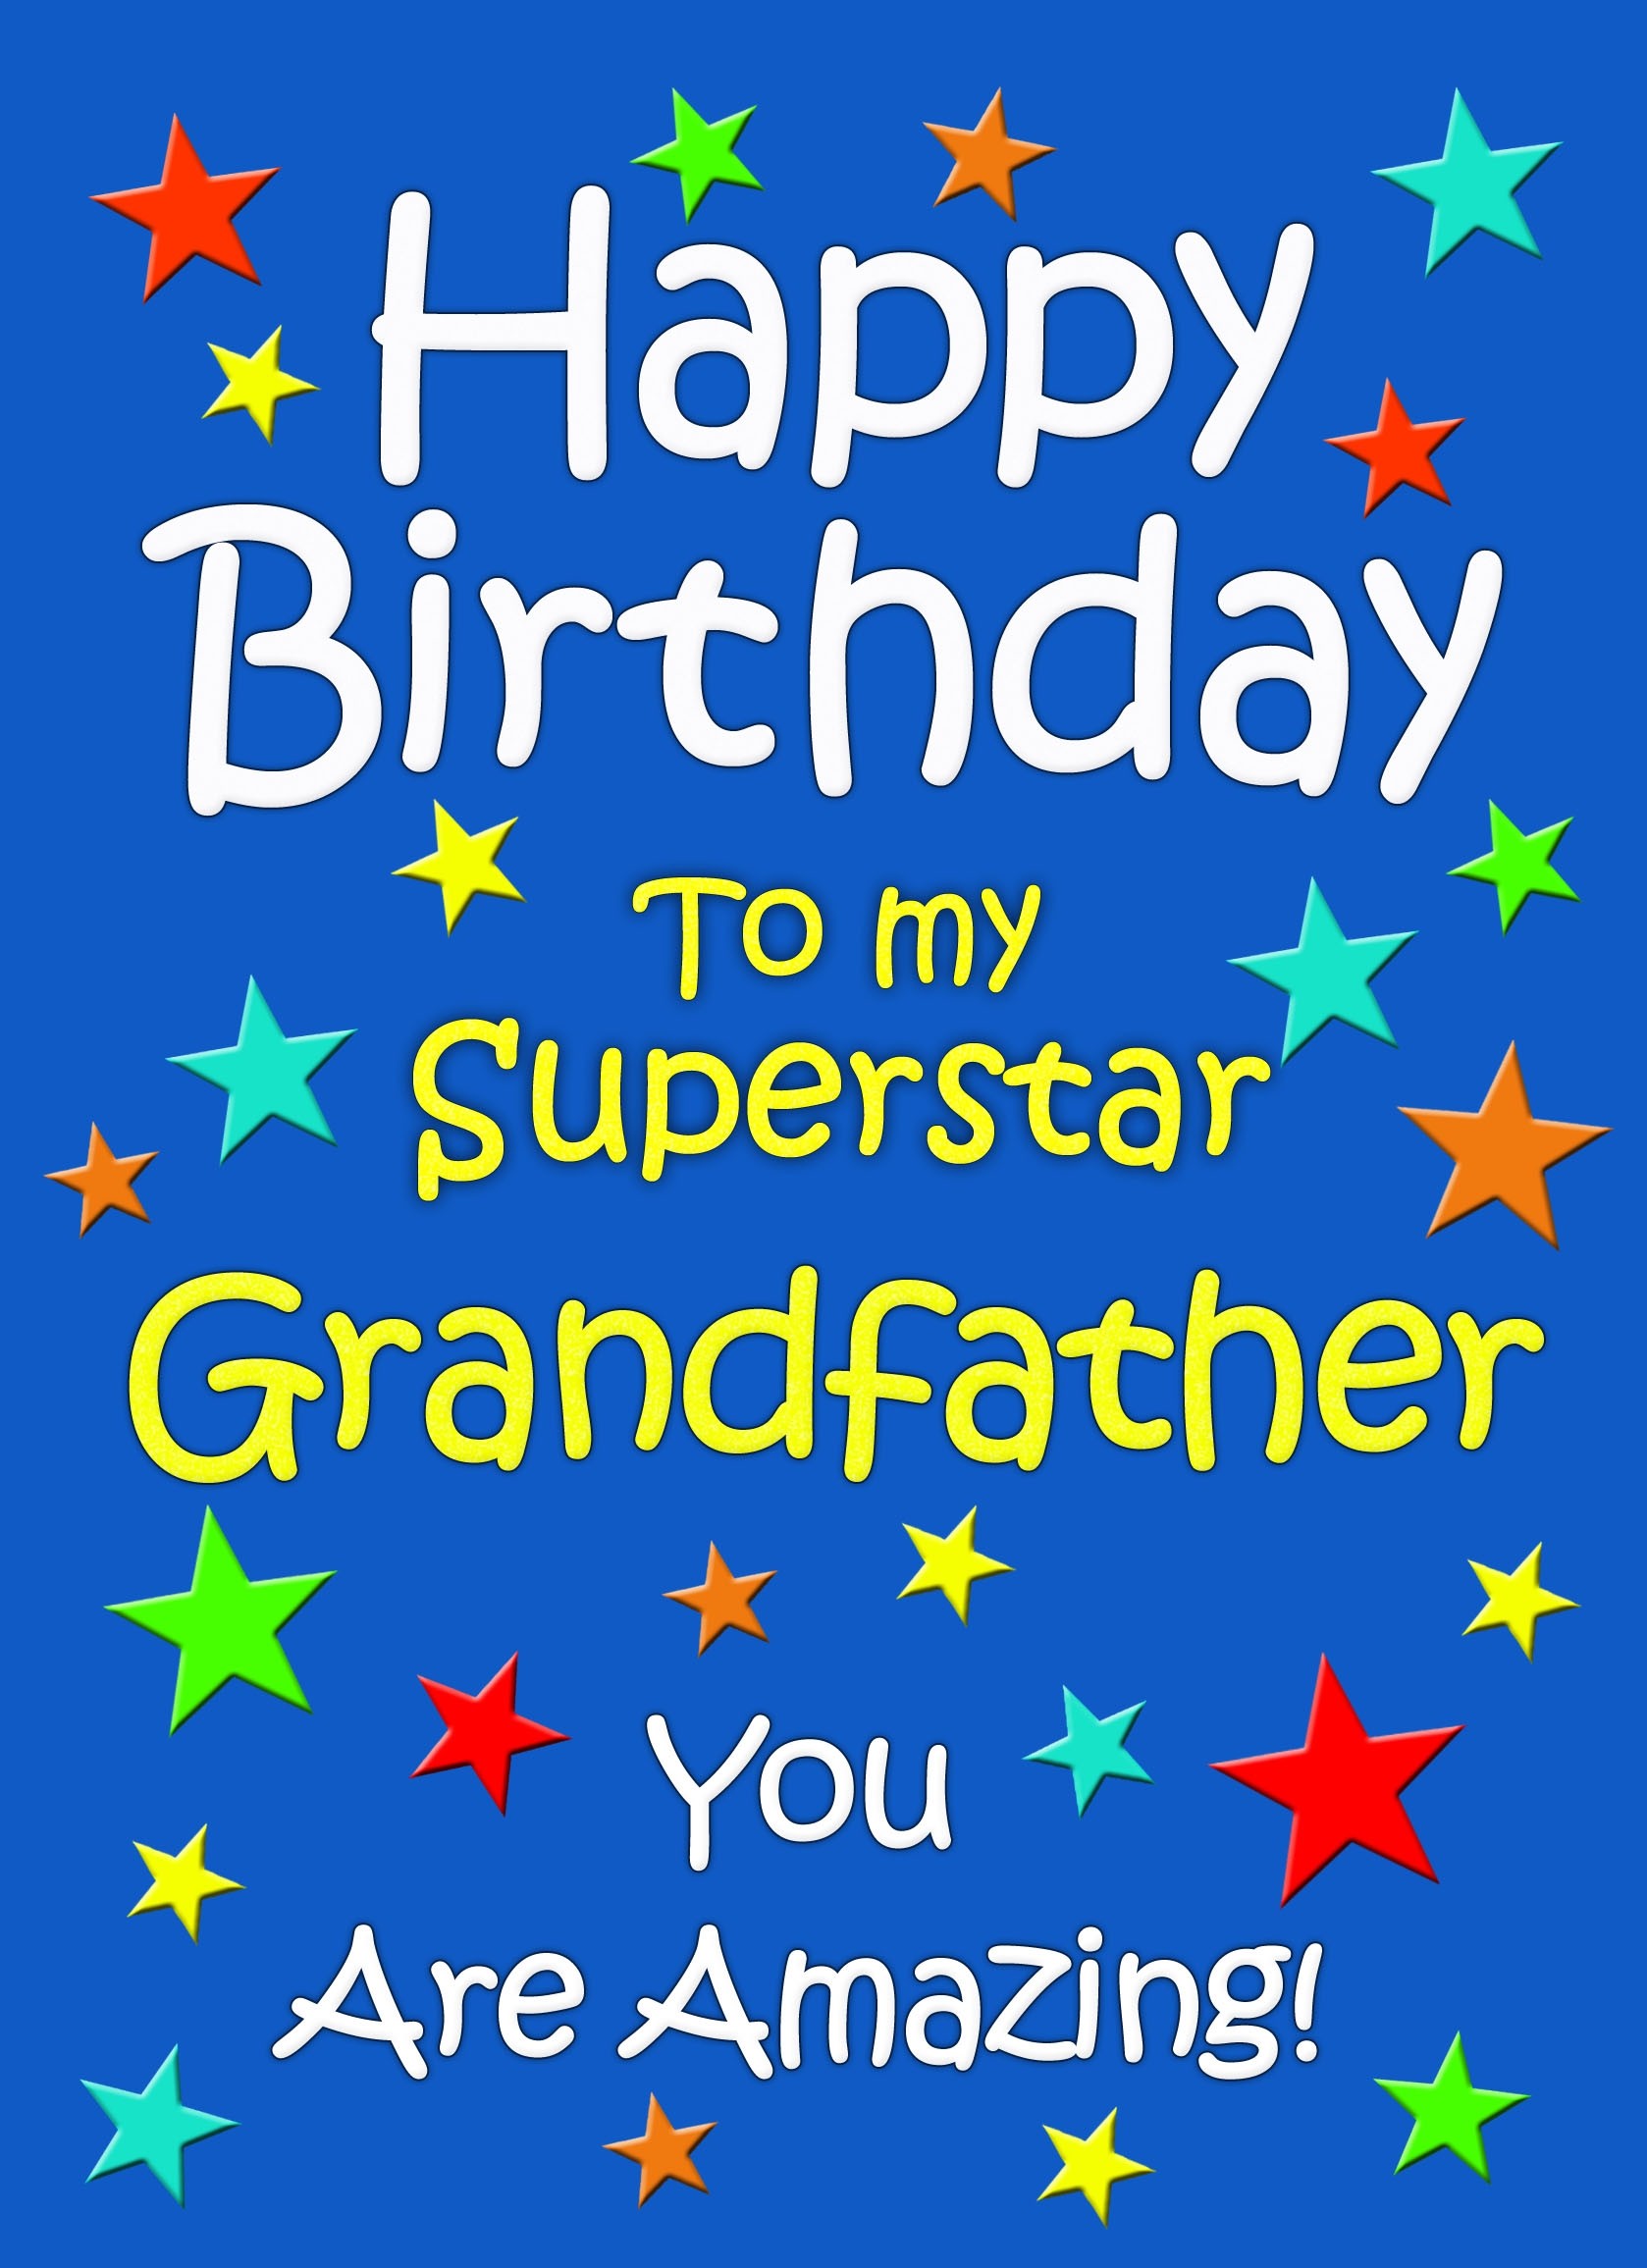 Grandfather Birthday Card (Blue)